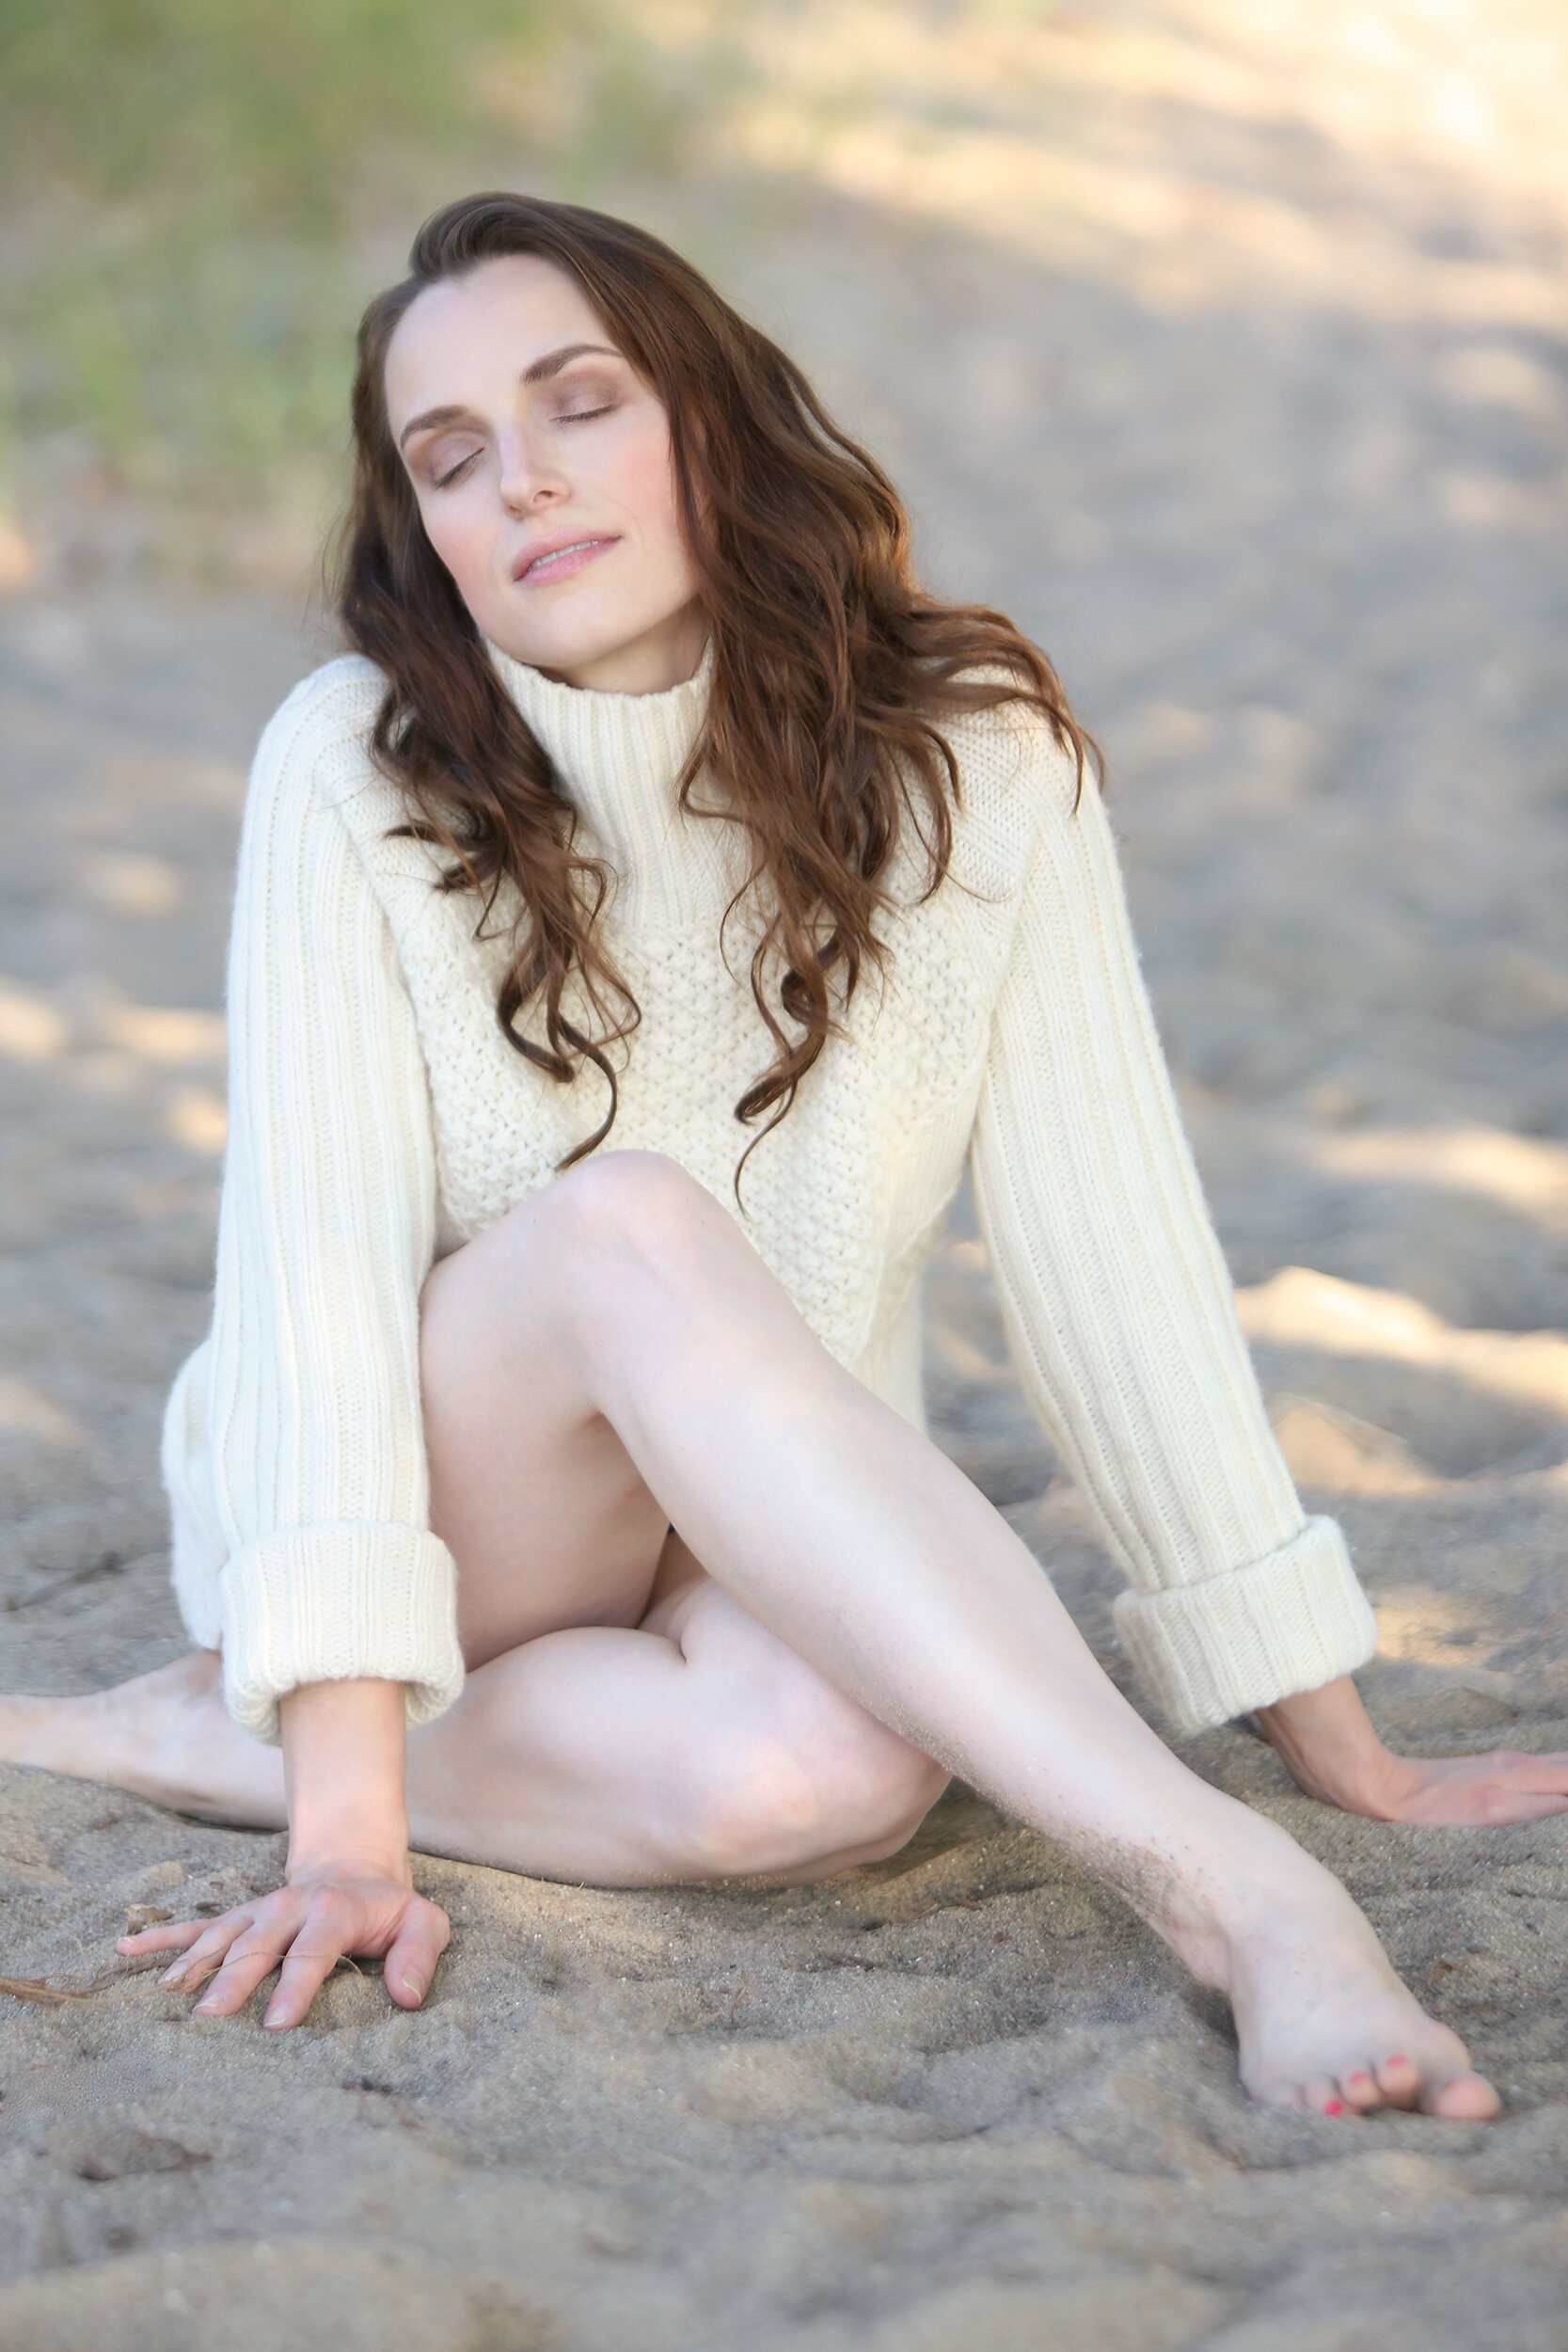 cleveland-fashion-photographer-model-white-sweater-beach-sand.jpg